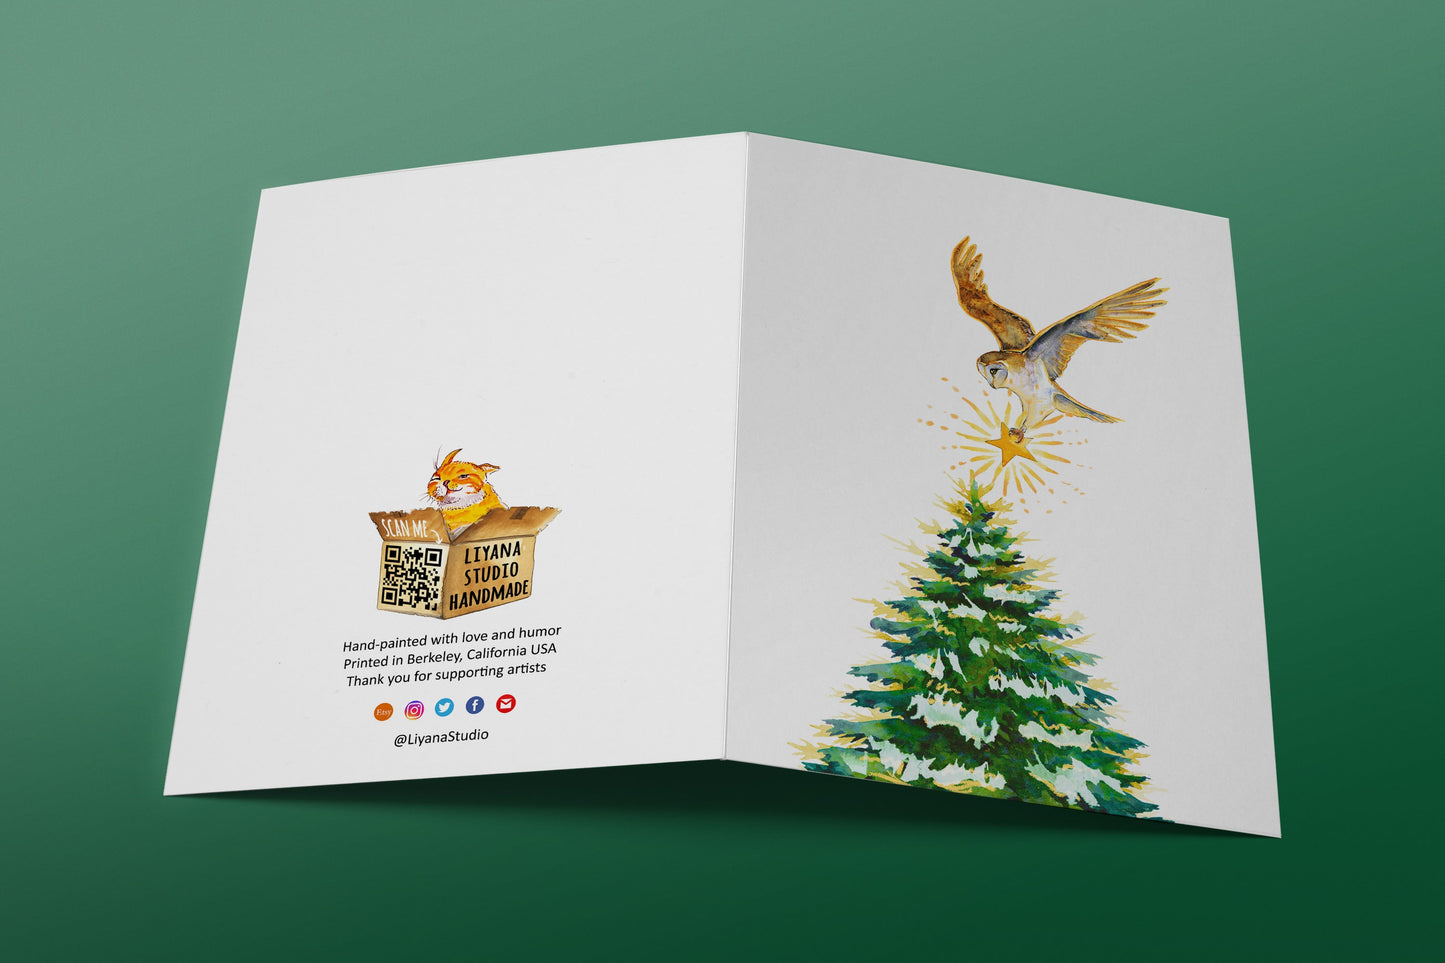 Barn Owl Winter Holiday Card Pack - Farmhouse Christmas Cards Handmade For Friends